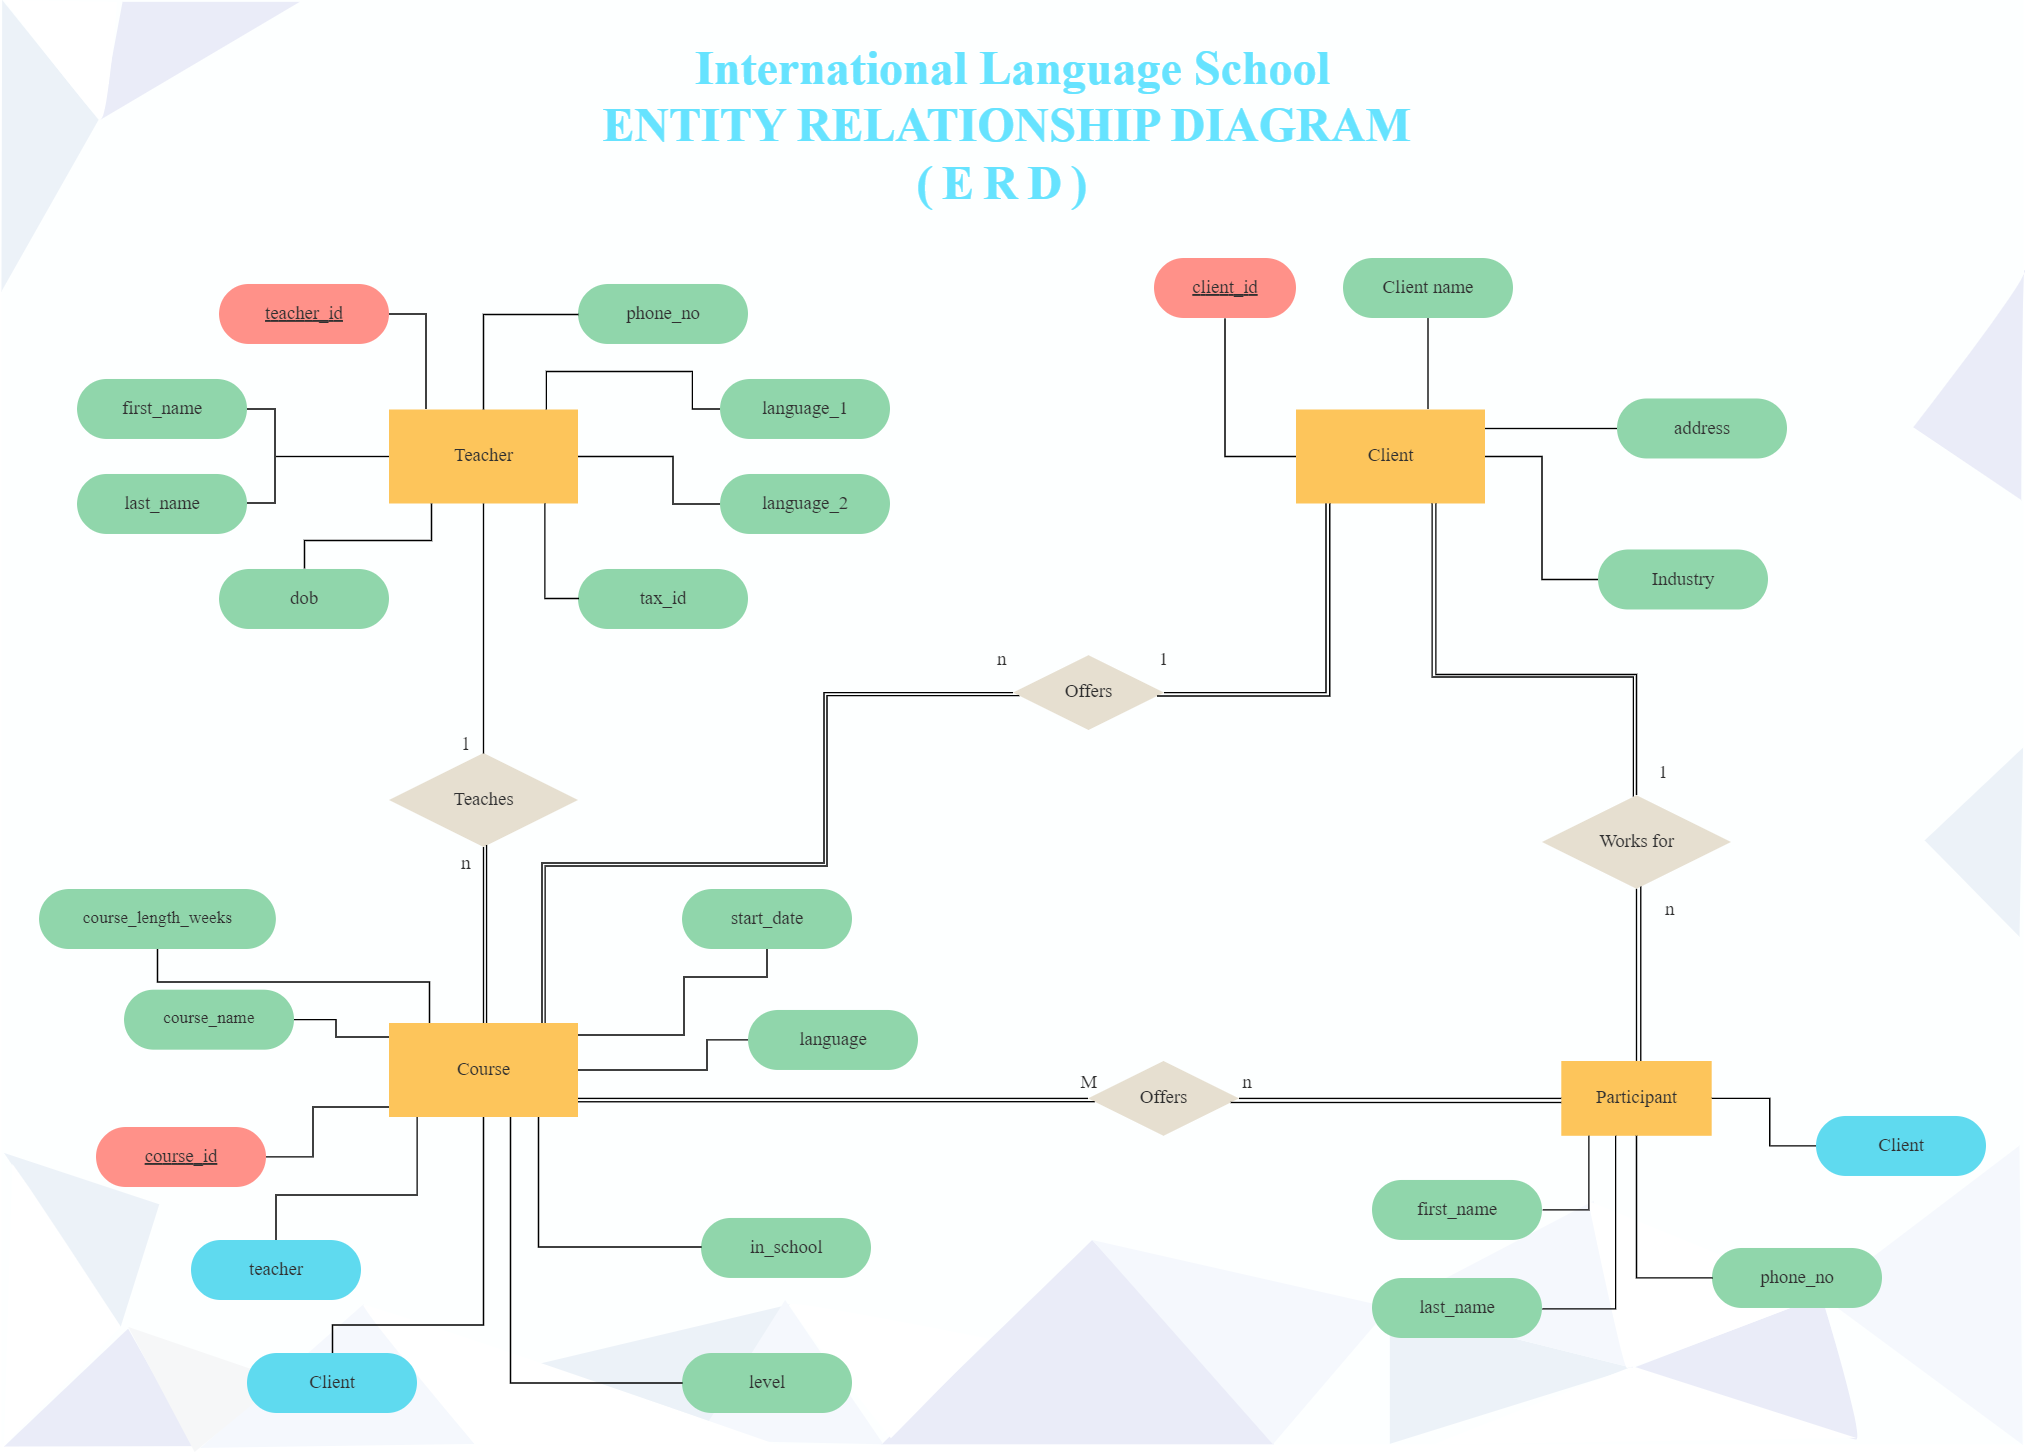 SQL ER Diagram for International Language School